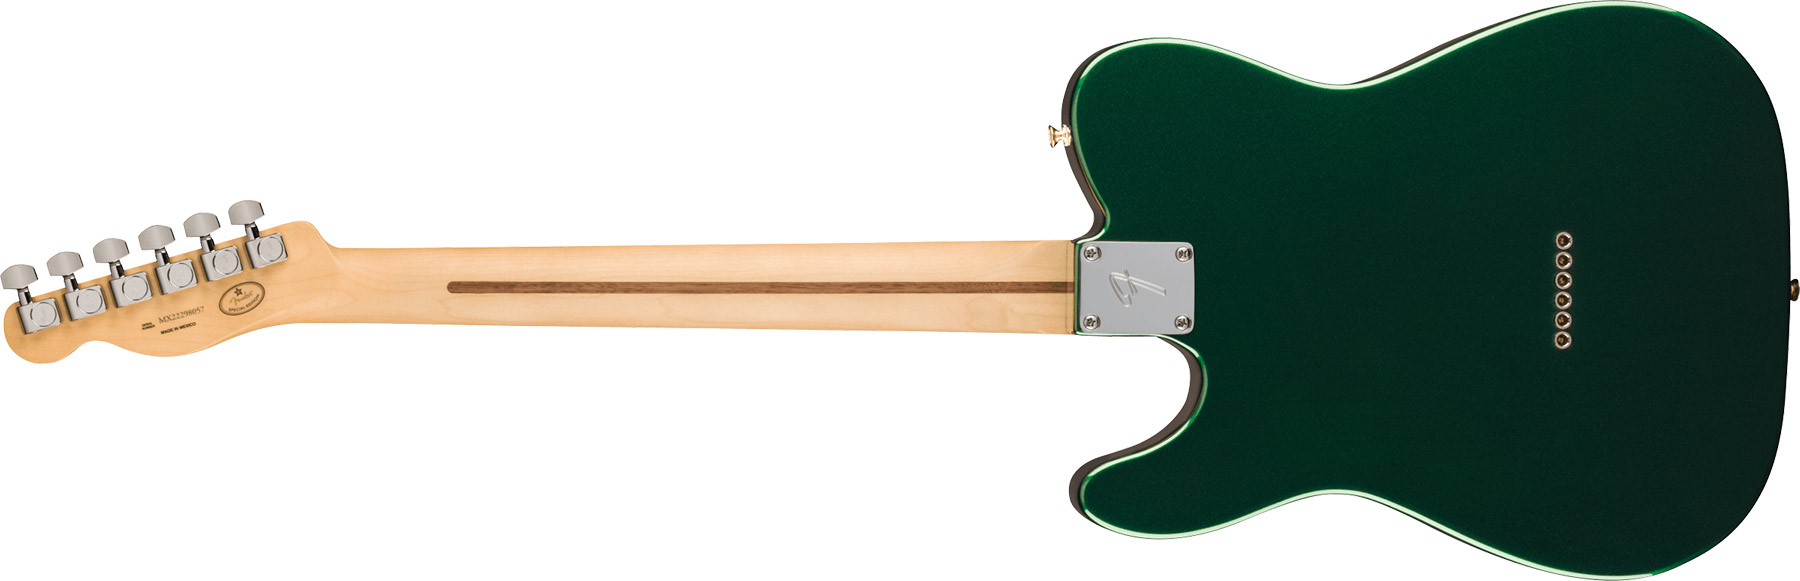 Fender Tele Player Ltd Mex 2s Seymour Duncan Mn - British Racing Green - E-Gitarre in Teleform - Variation 1